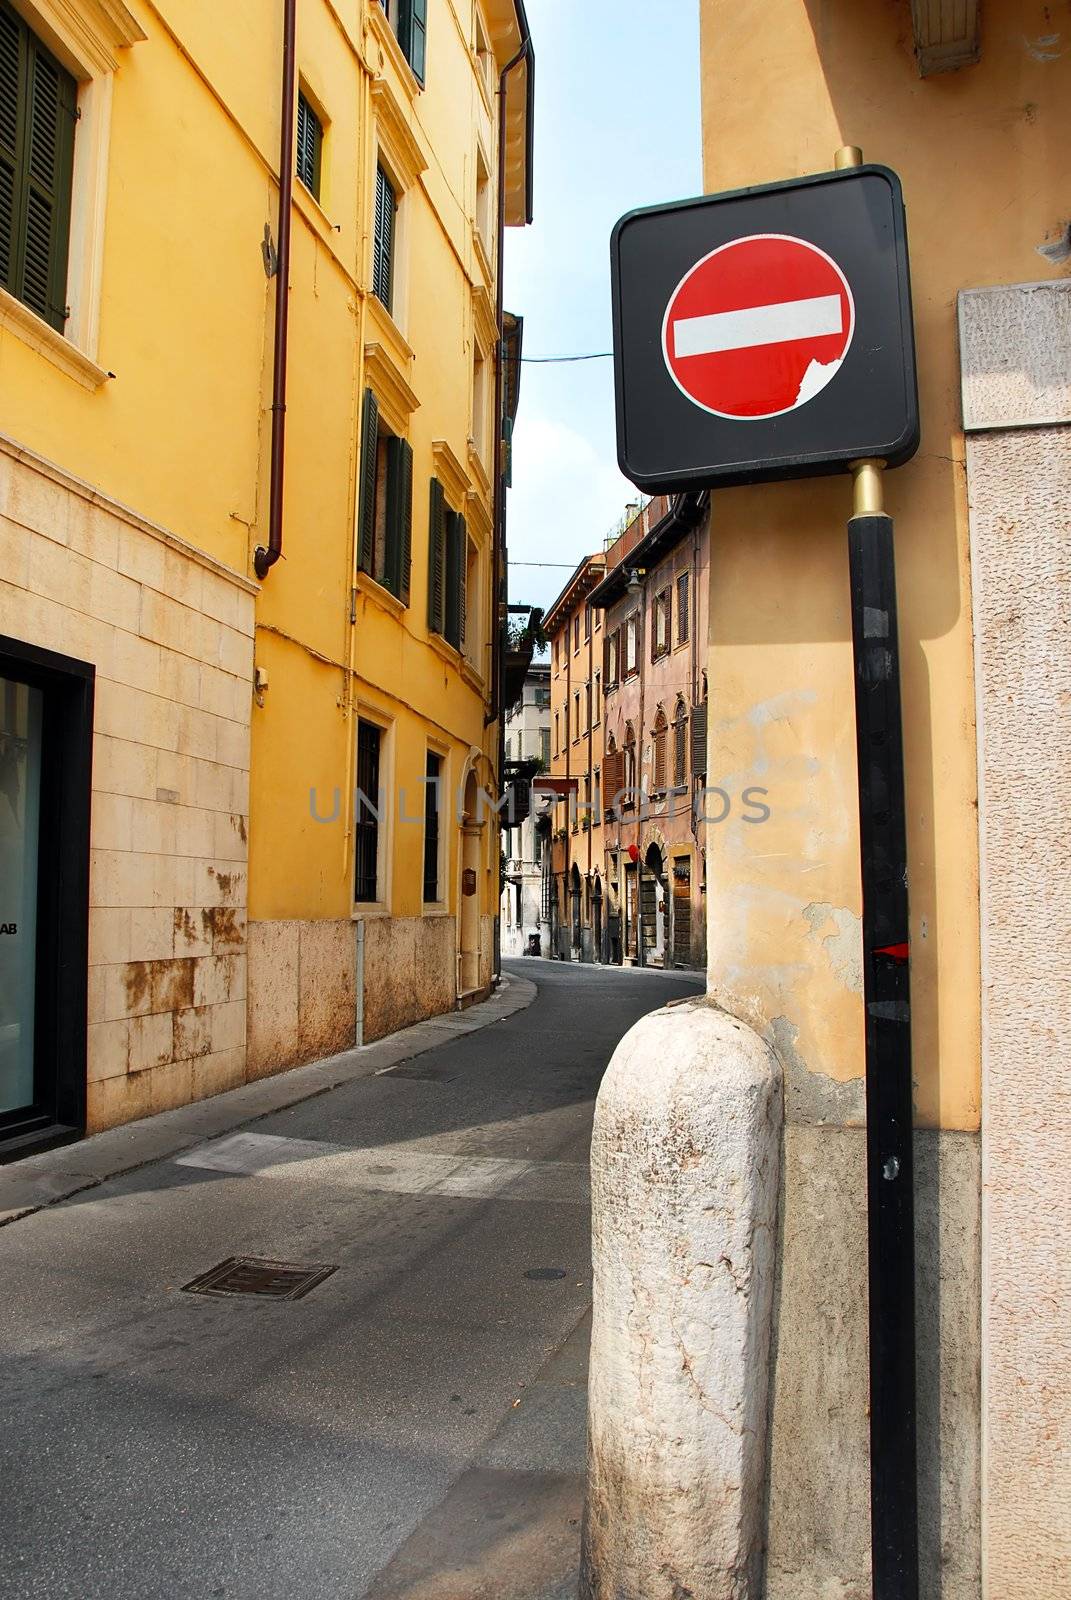 traffic sign in narrow curve street in Verona, Italy